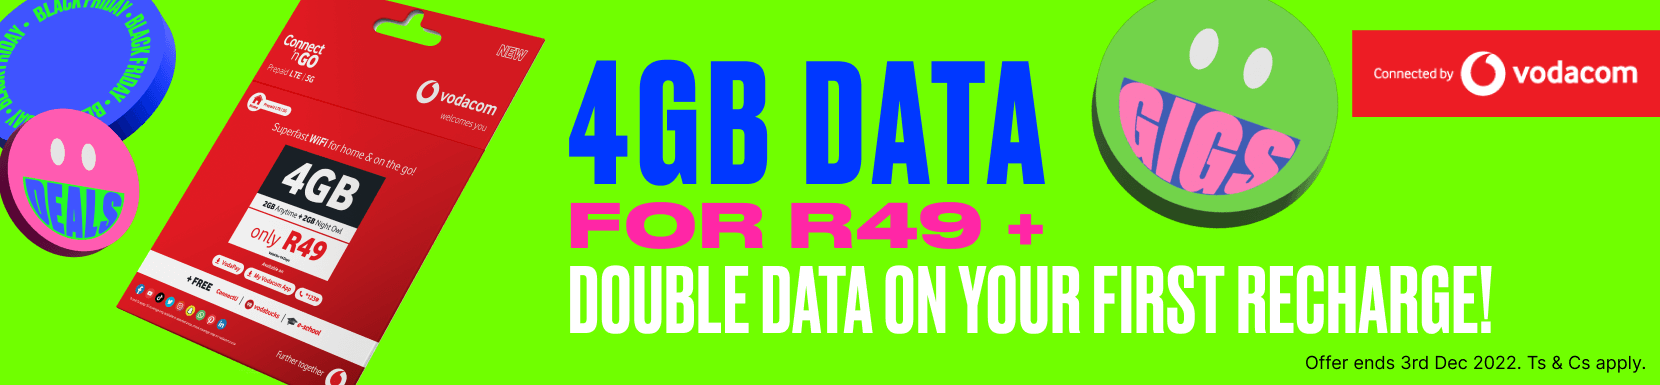 Mr Price Mobile 4GB Data for R49